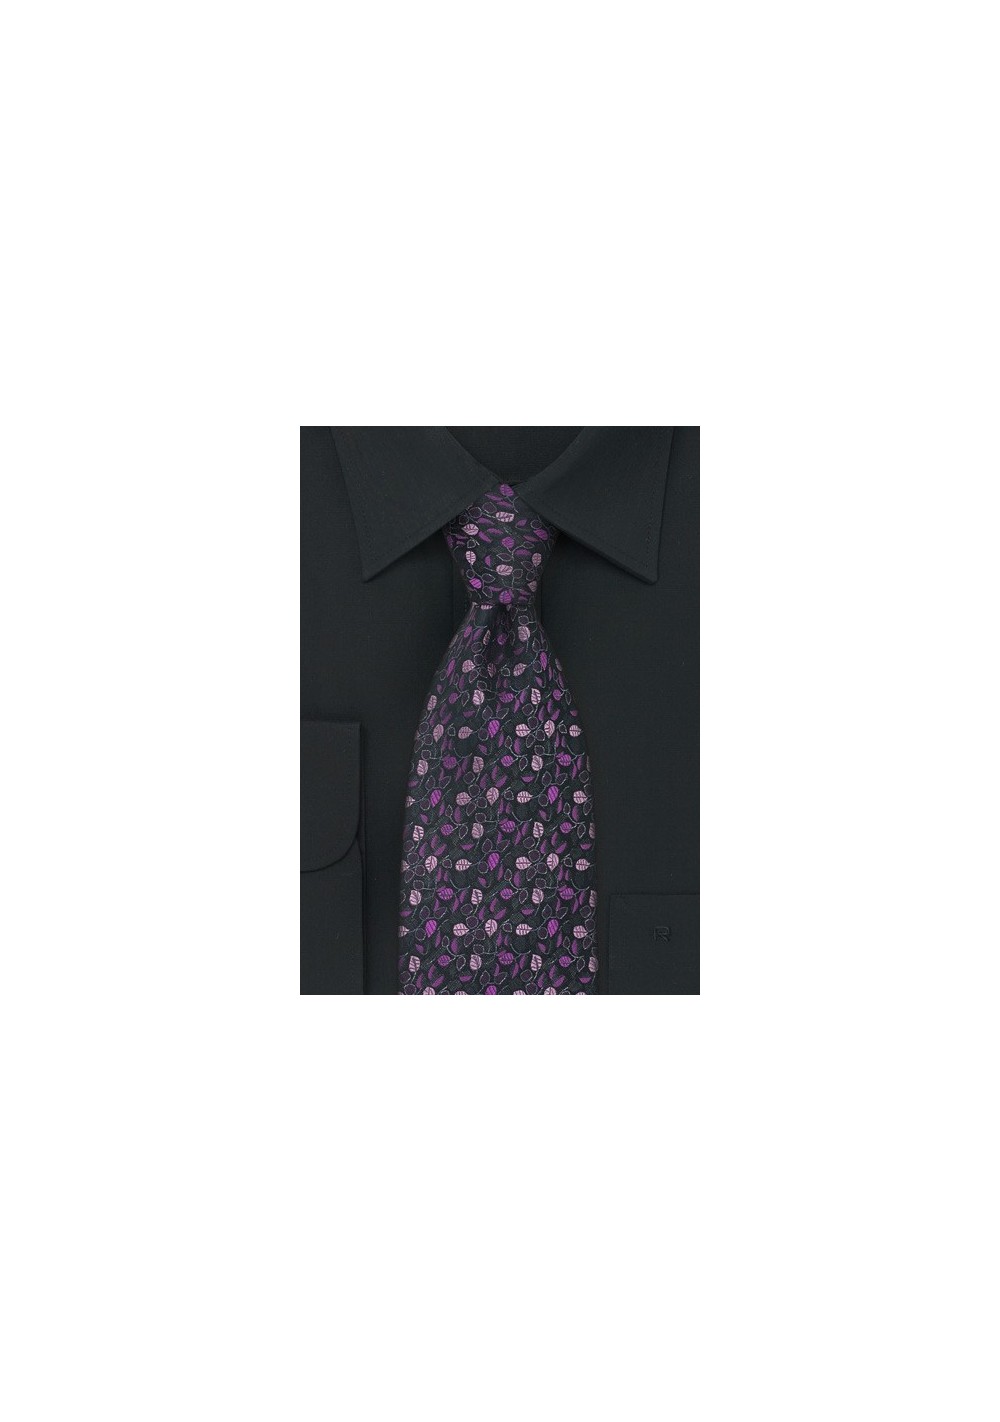 Designer Necktie in Charcoal and Pink